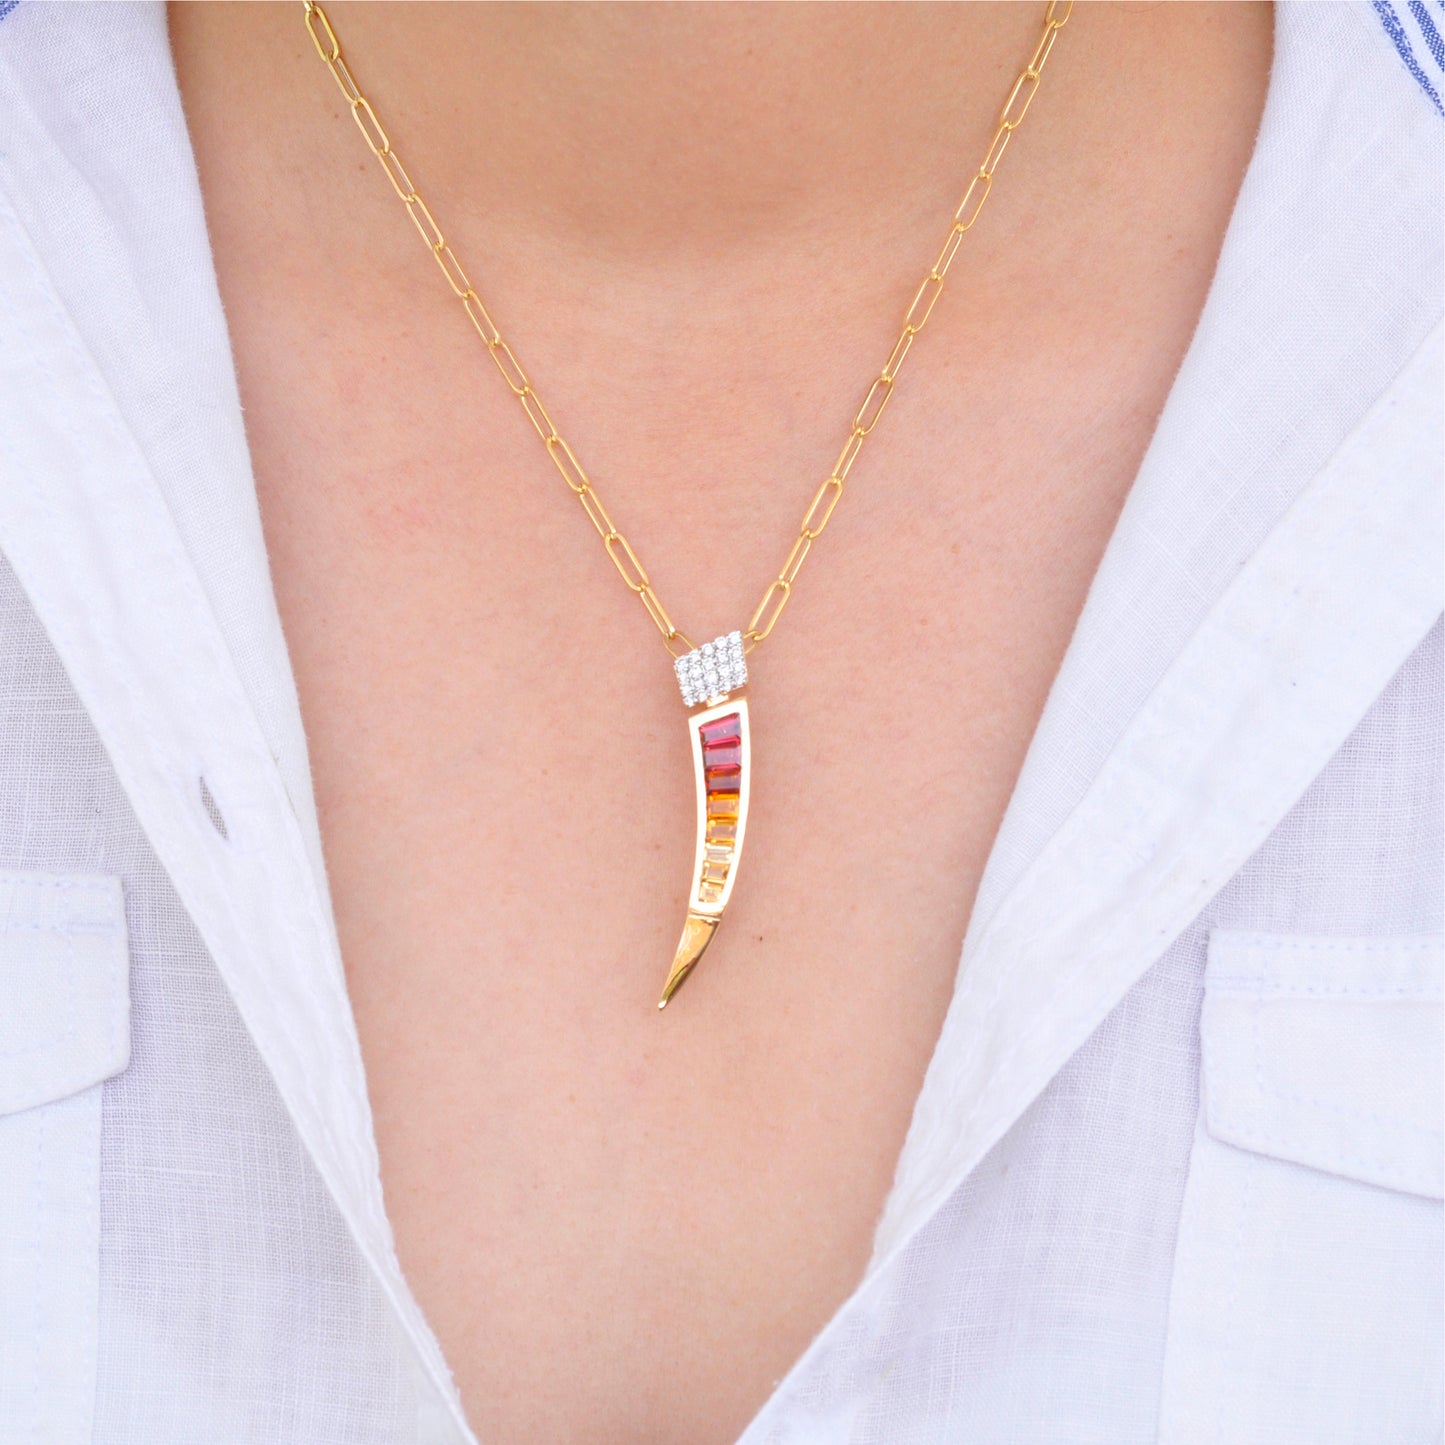 Purchase diamond gemstone necklace online